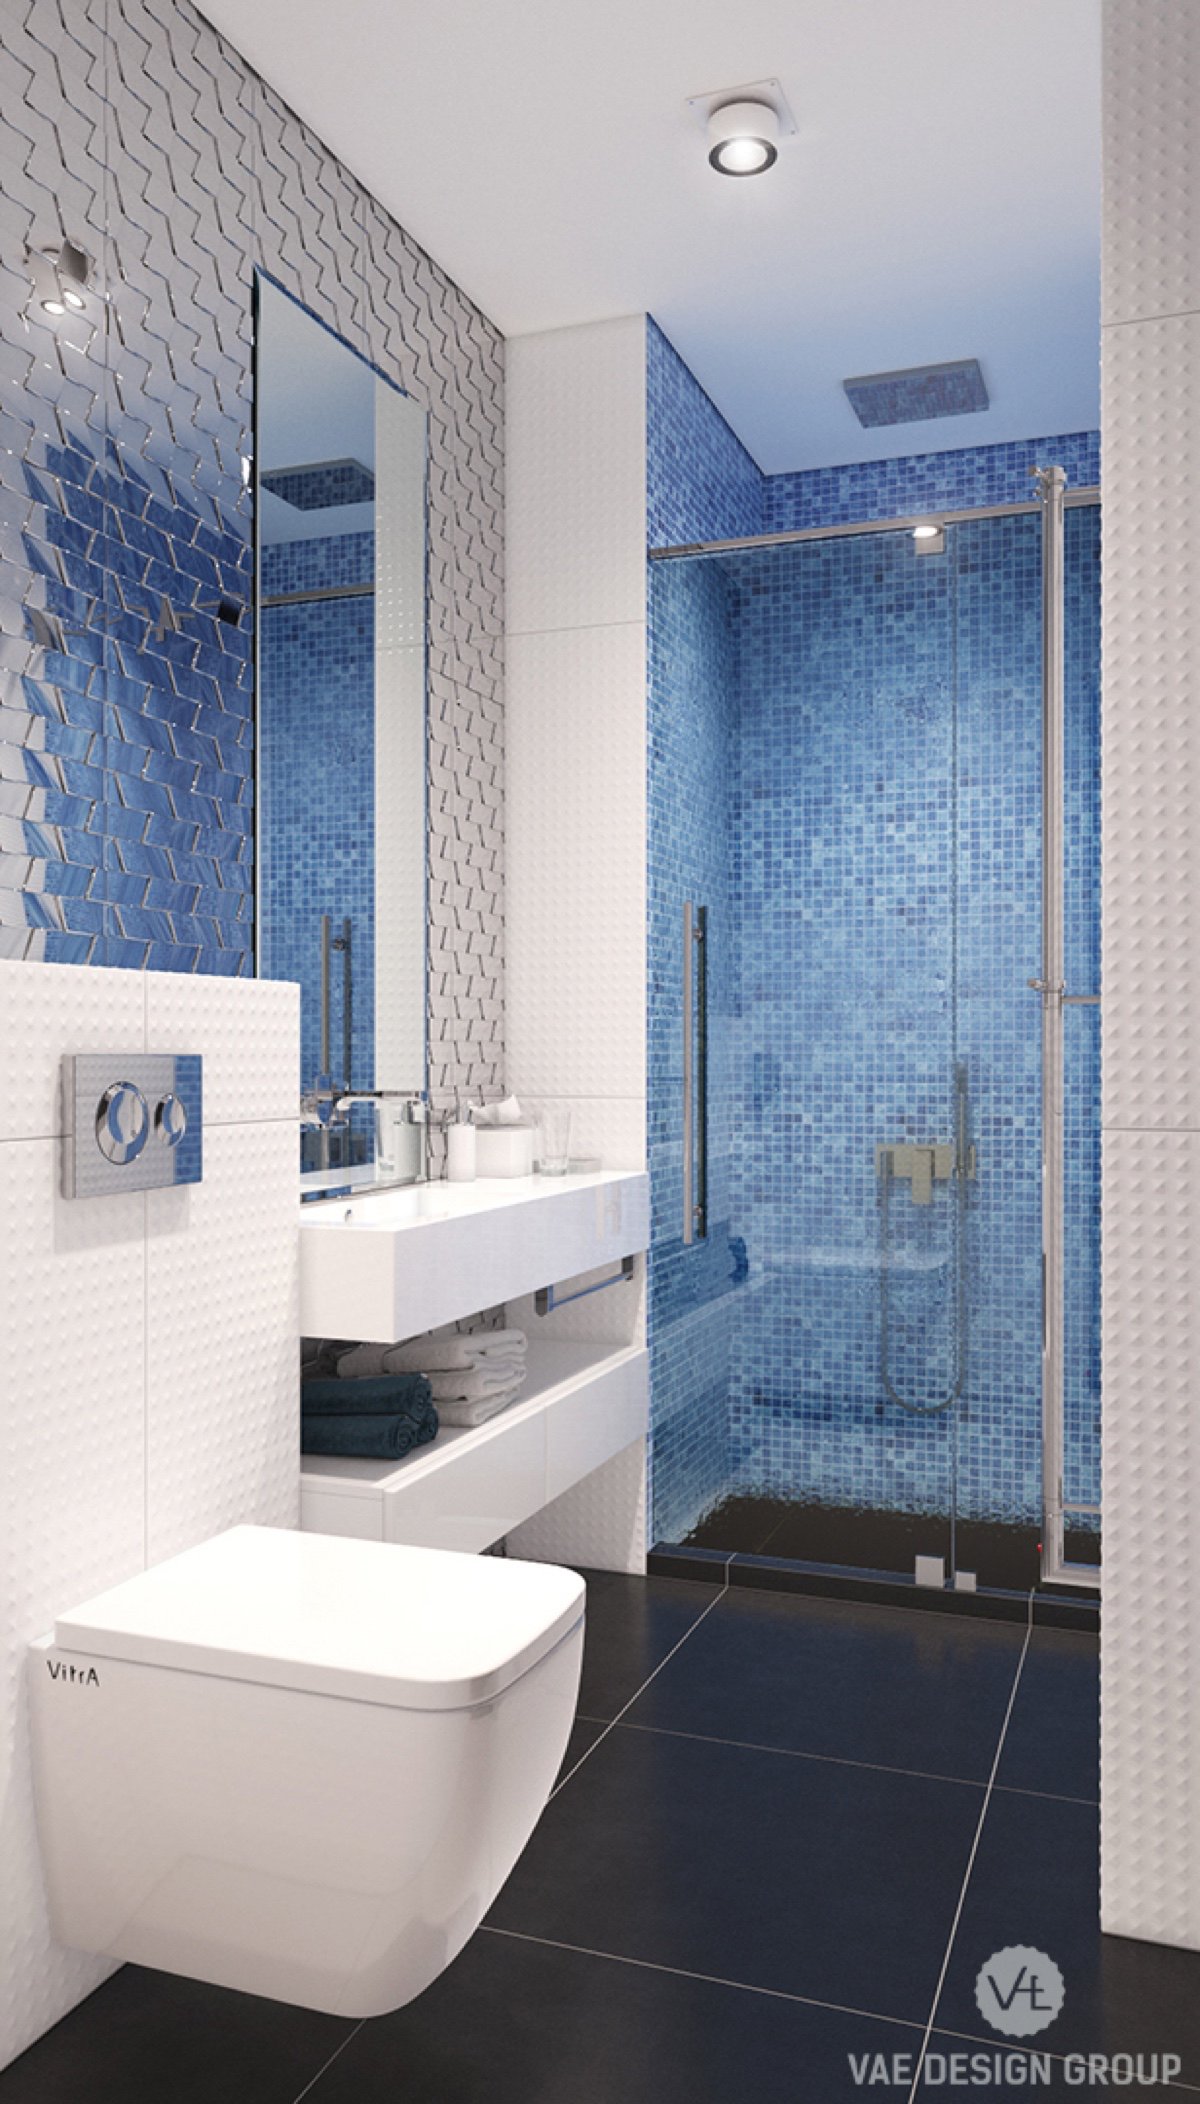 blue backsplash bathroom "width =" 1200 "height =" 2104 "srcset =" https://mileray.com/wp-content/uploads/2020/05/1588515877_507_Inspiration-To-Arrange-Minimalist-Bathroom-Designs-With-Backsplash-Decorating-Ideas.jpg 1200w, https: / / mileray.com/wp-content/uploads/2016/10/VAE-Design-Group1-1-171x300.jpg 171w, https://mileray.com/wp-content/uploads/2016/10/VAE-Design- Group1 -1-768x1347.jpg 768w, https://mileray.com/wp-content/uploads/2016/10/VAE-Design-Group1-1-584x1024.jpg 584w, https://mileray.com/wp- content /uploads/2016/10/VAE-Design-Group1-1-696x1220.jpg 696w, https://mileray.com/wp-content/uploads/2016/10/VAE-Design-Group1-1-1068x1873.jpg 1068w, https://mileray.com/wp-content/uploads/2016/10/VAE-Design-Group1-1-240x420.jpg 240w "sizes =" (maximum width: 1200px) 100vw, 1200px